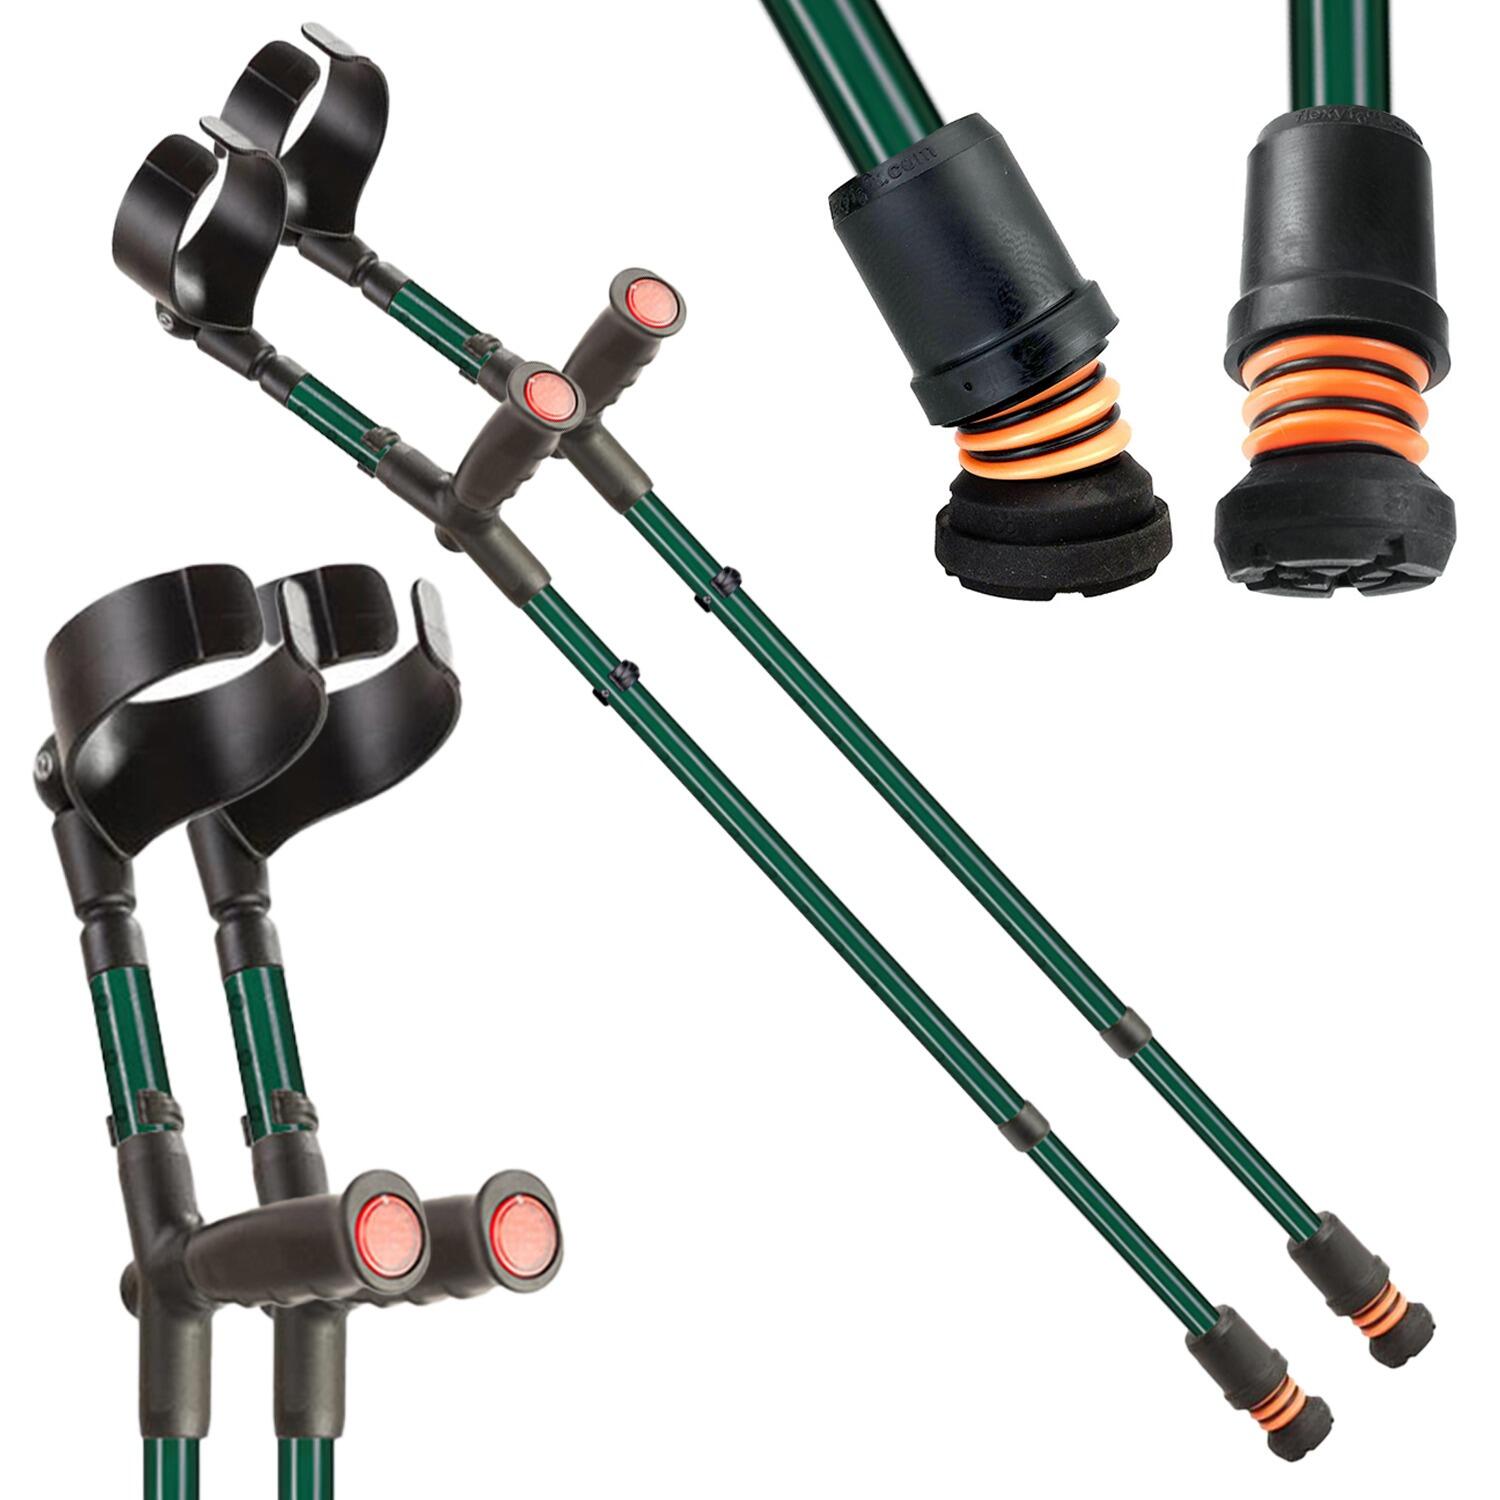 Flexyfoot Soft Grip Shock Absorbing Crutches - British Racing Green